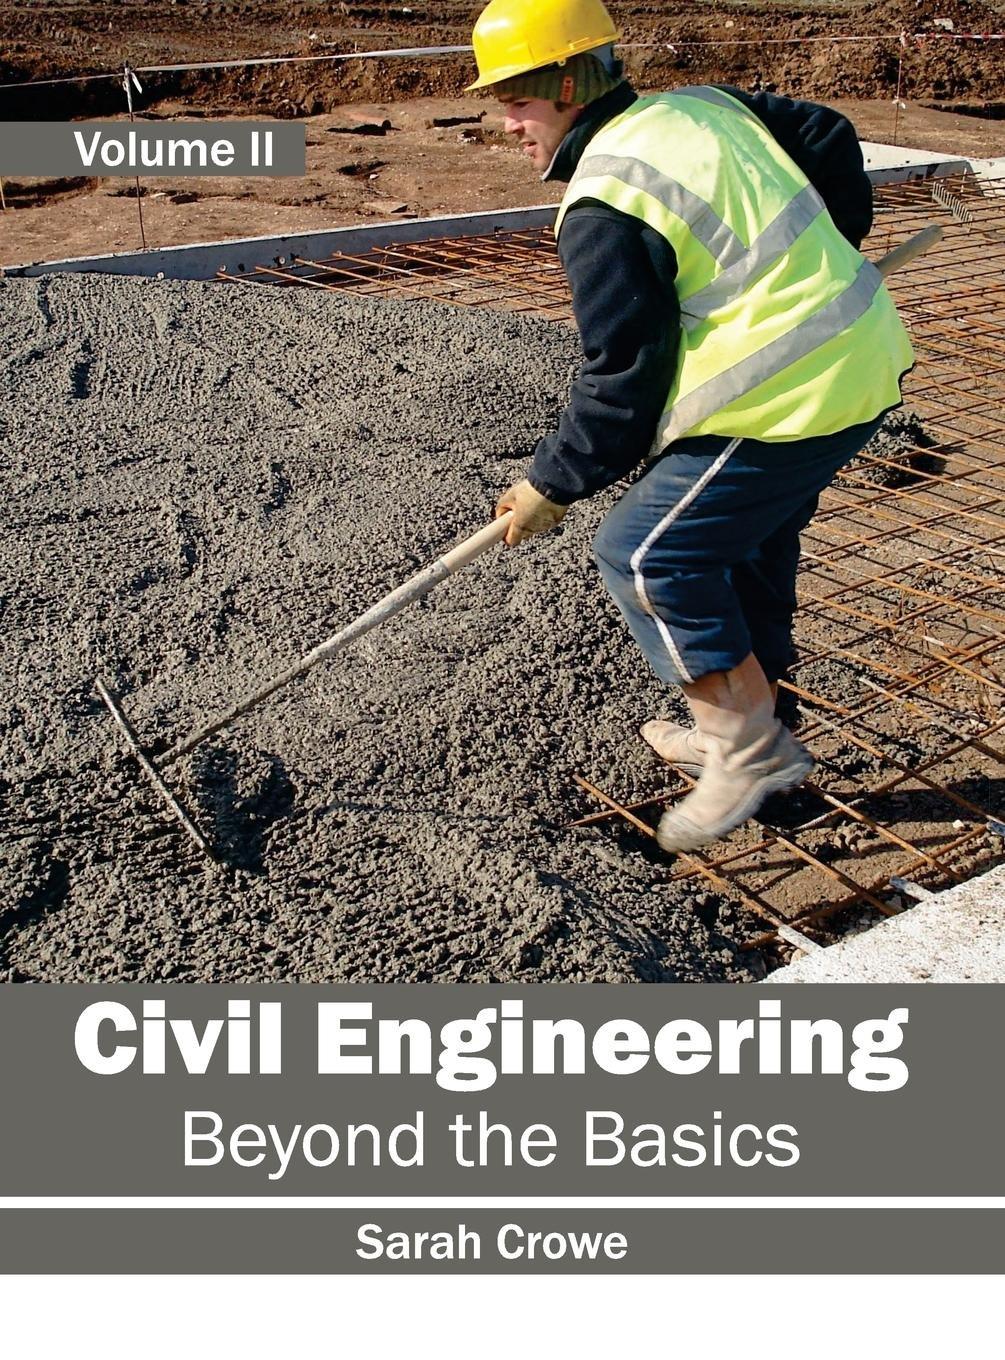 civil engineering beyond the basics volume ii 1st edition sarah crowe 1632401045, 978-1632401045